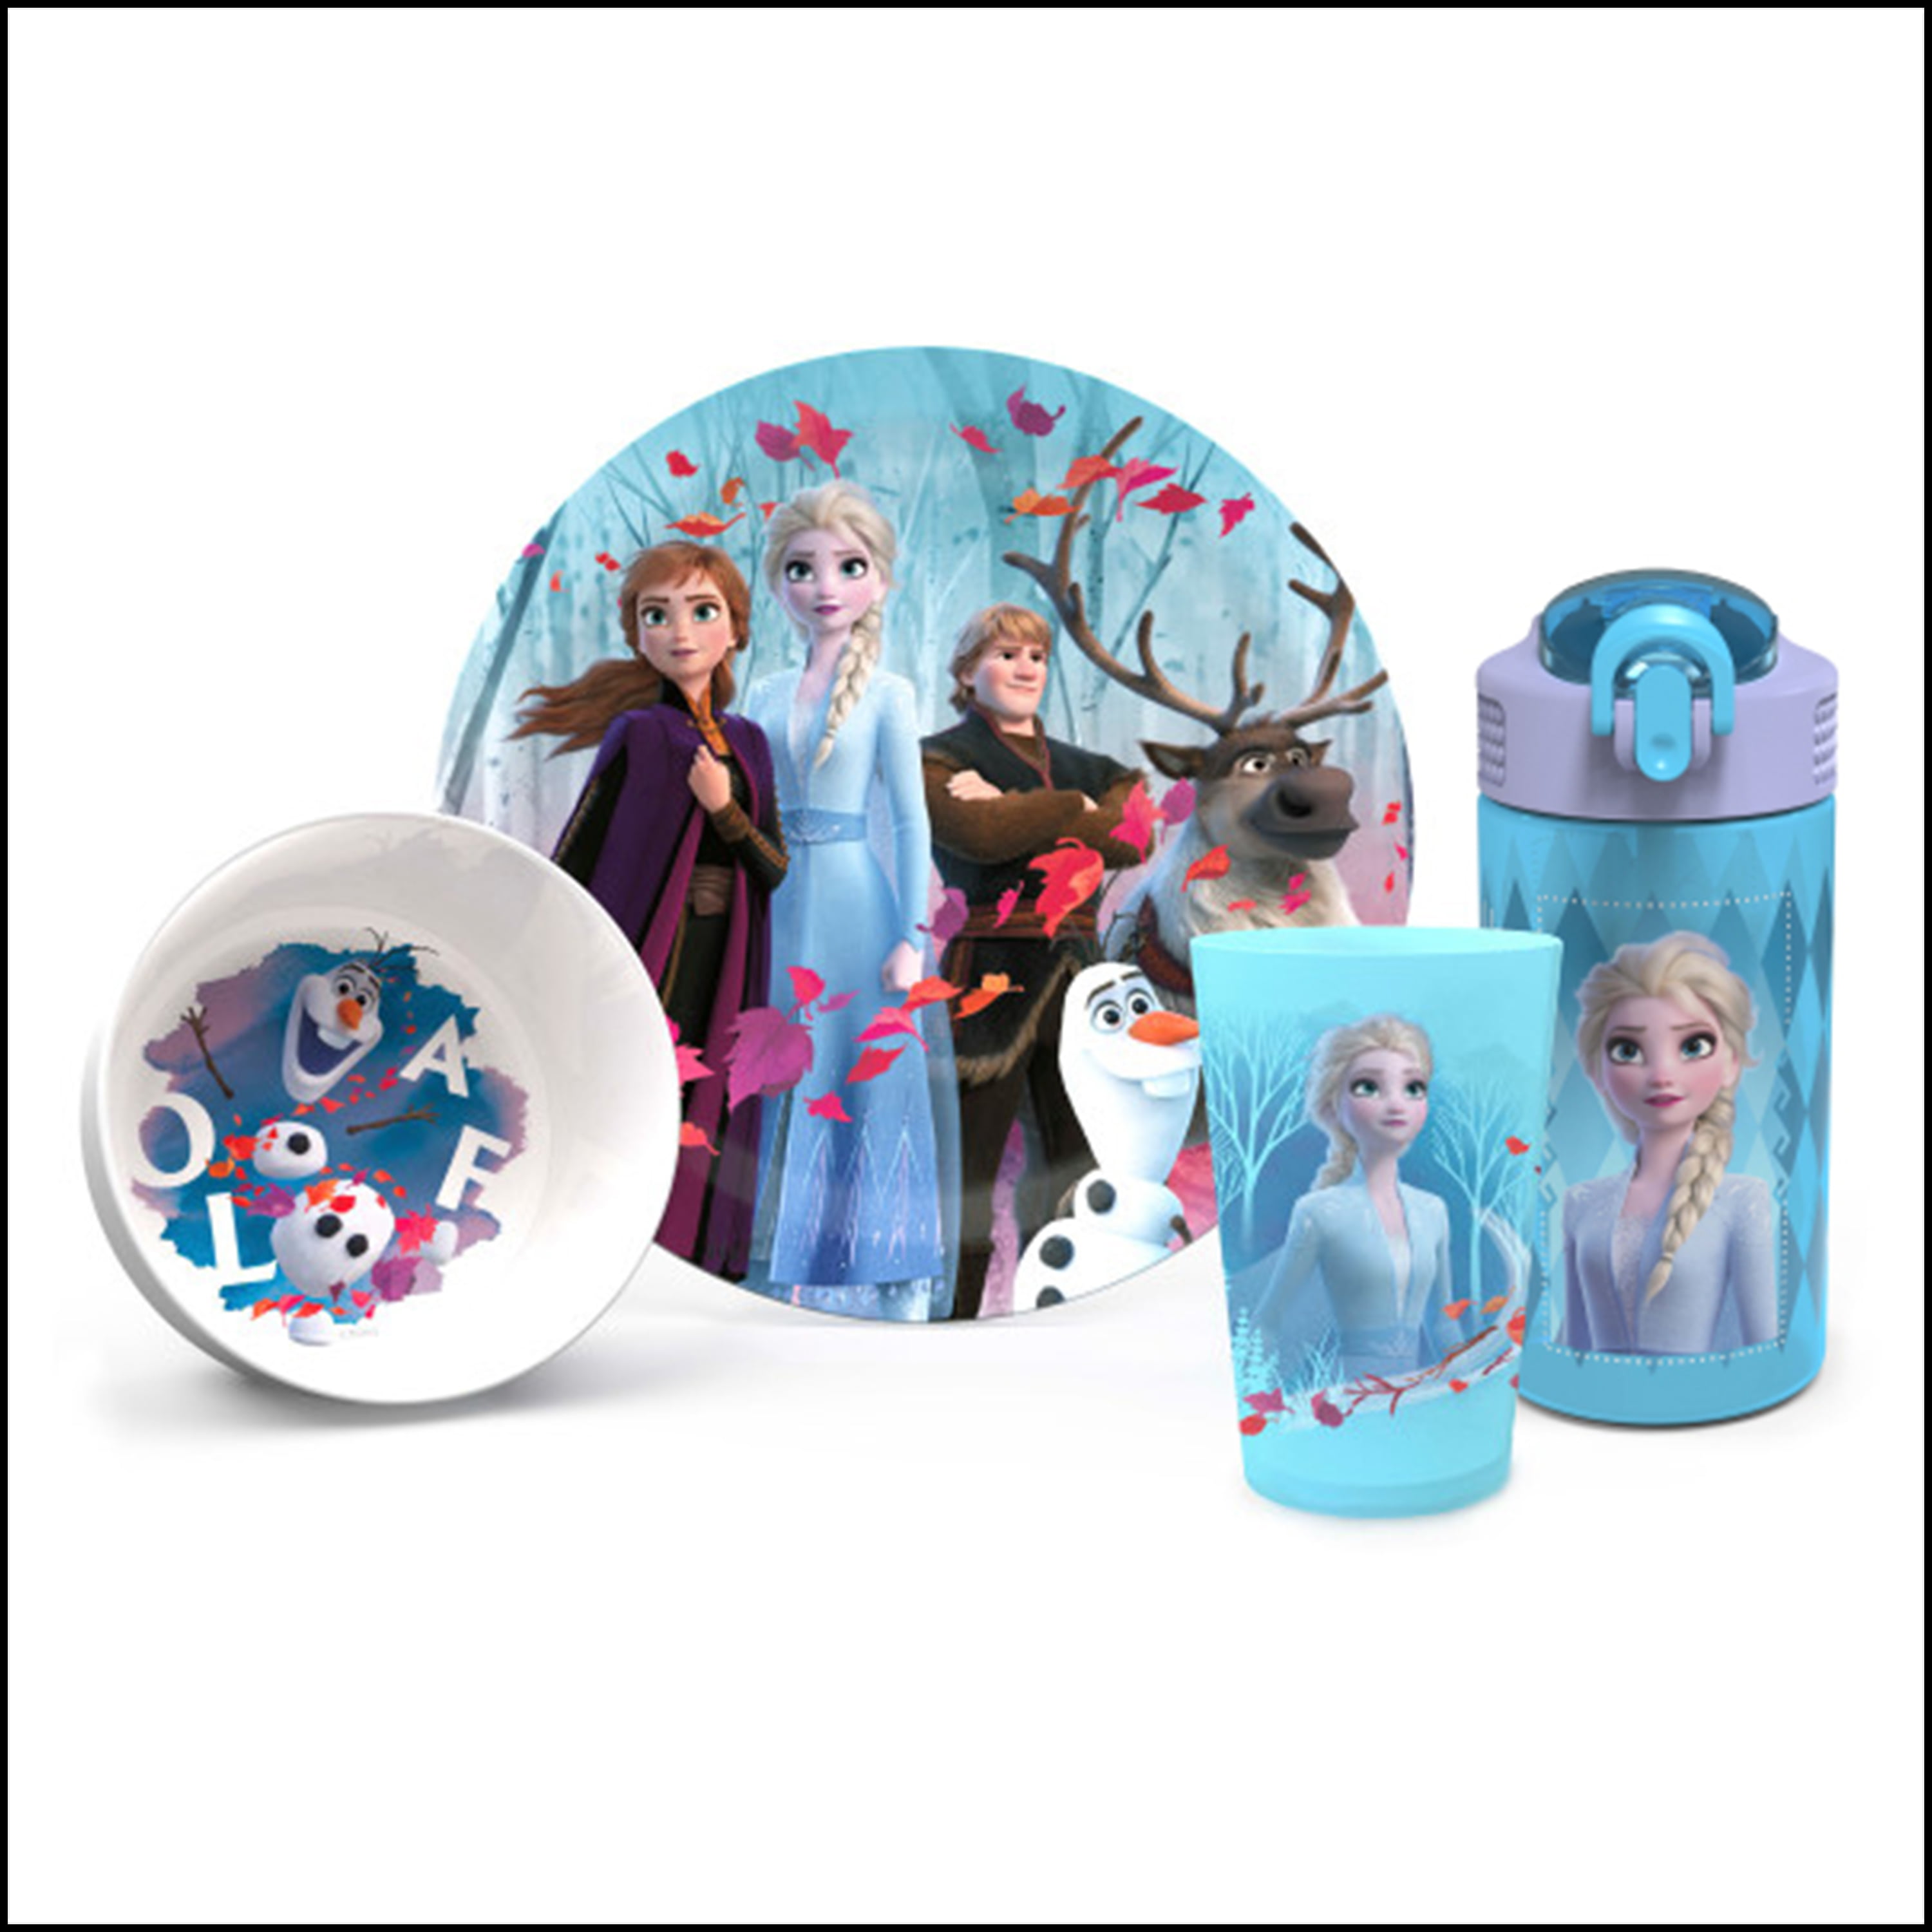 Trolls Zak Designs Melamine 3pc Kids Dinnerware Set - Pink/Blue – Target  Inventory Checker – BrickSeek